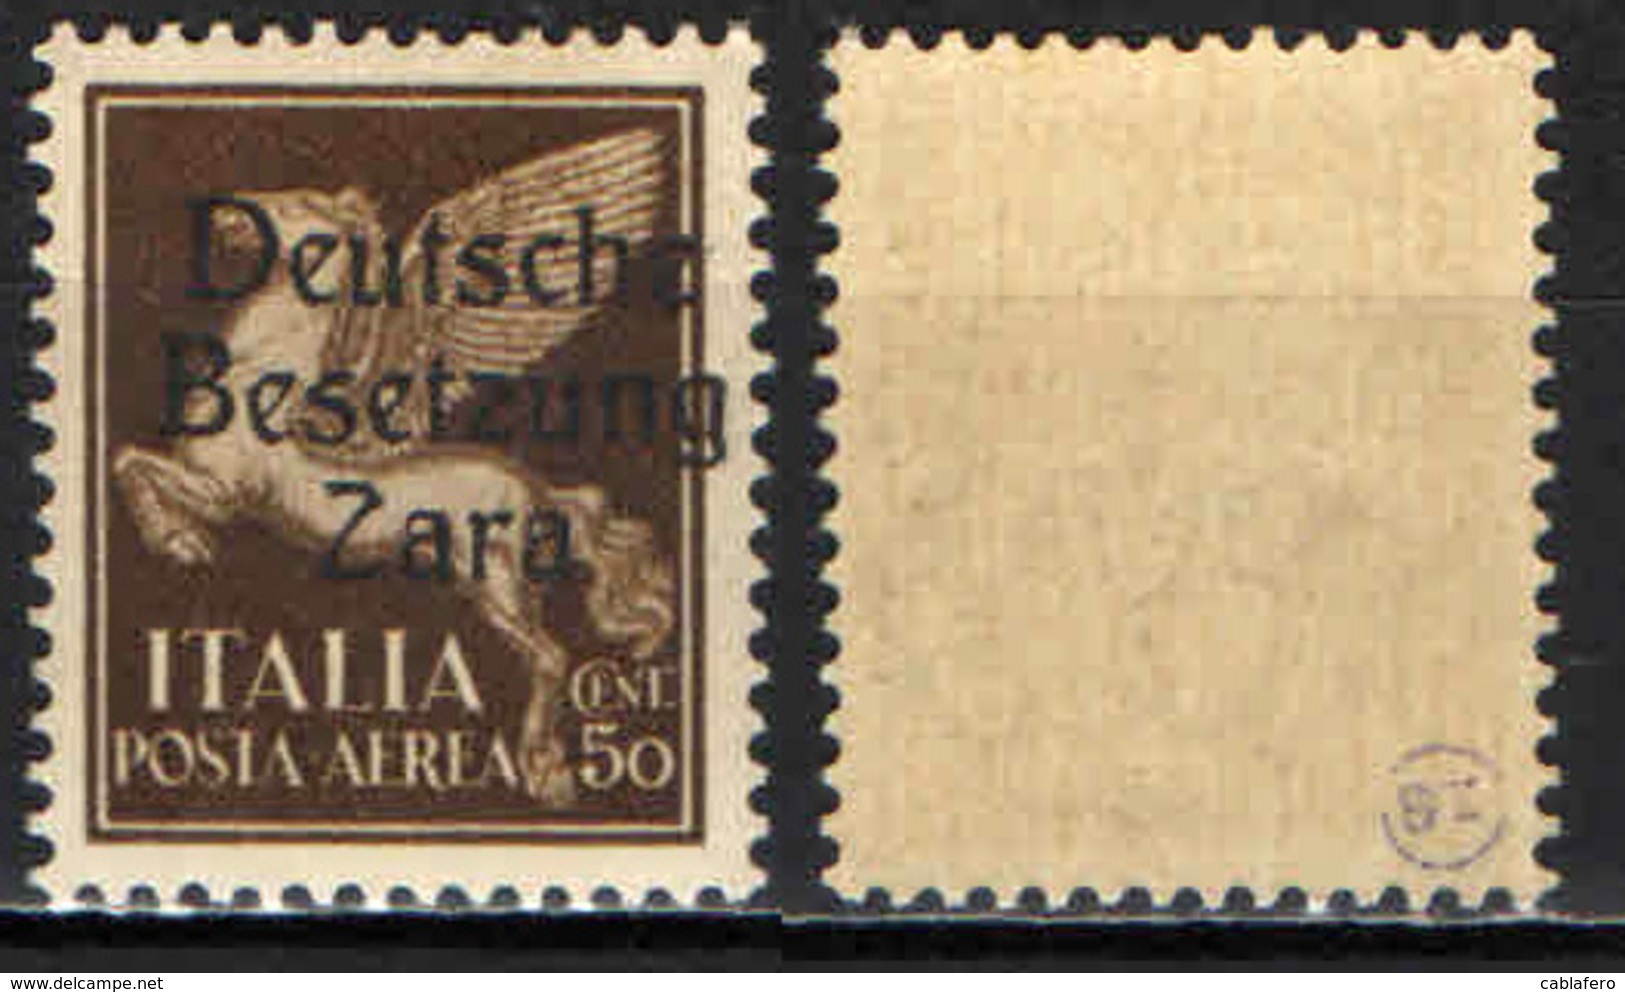 ITALIA - OCCUPAZIONE TEDESCA - ZARA - 1943 - SOVRASTAMPA - 50 CENT. - MNH - German Occ.: Zara